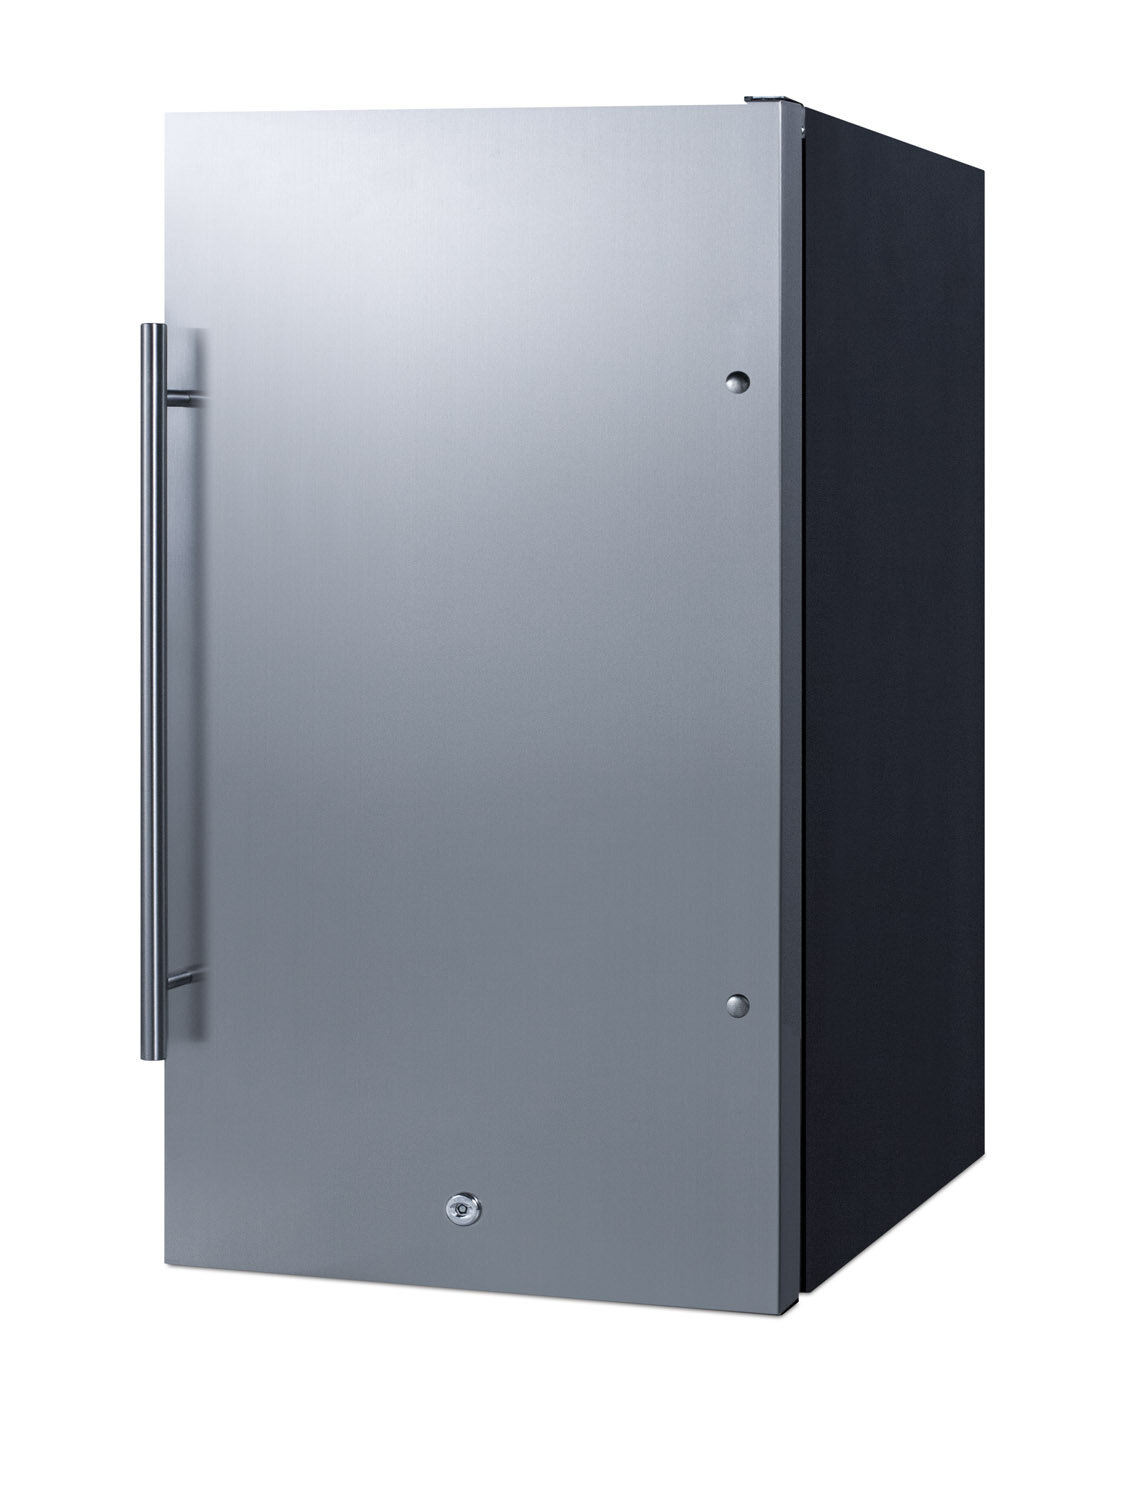 NewAir 3.3 cu. ft. Compact Mini Refrigerator with Freezer, Auto